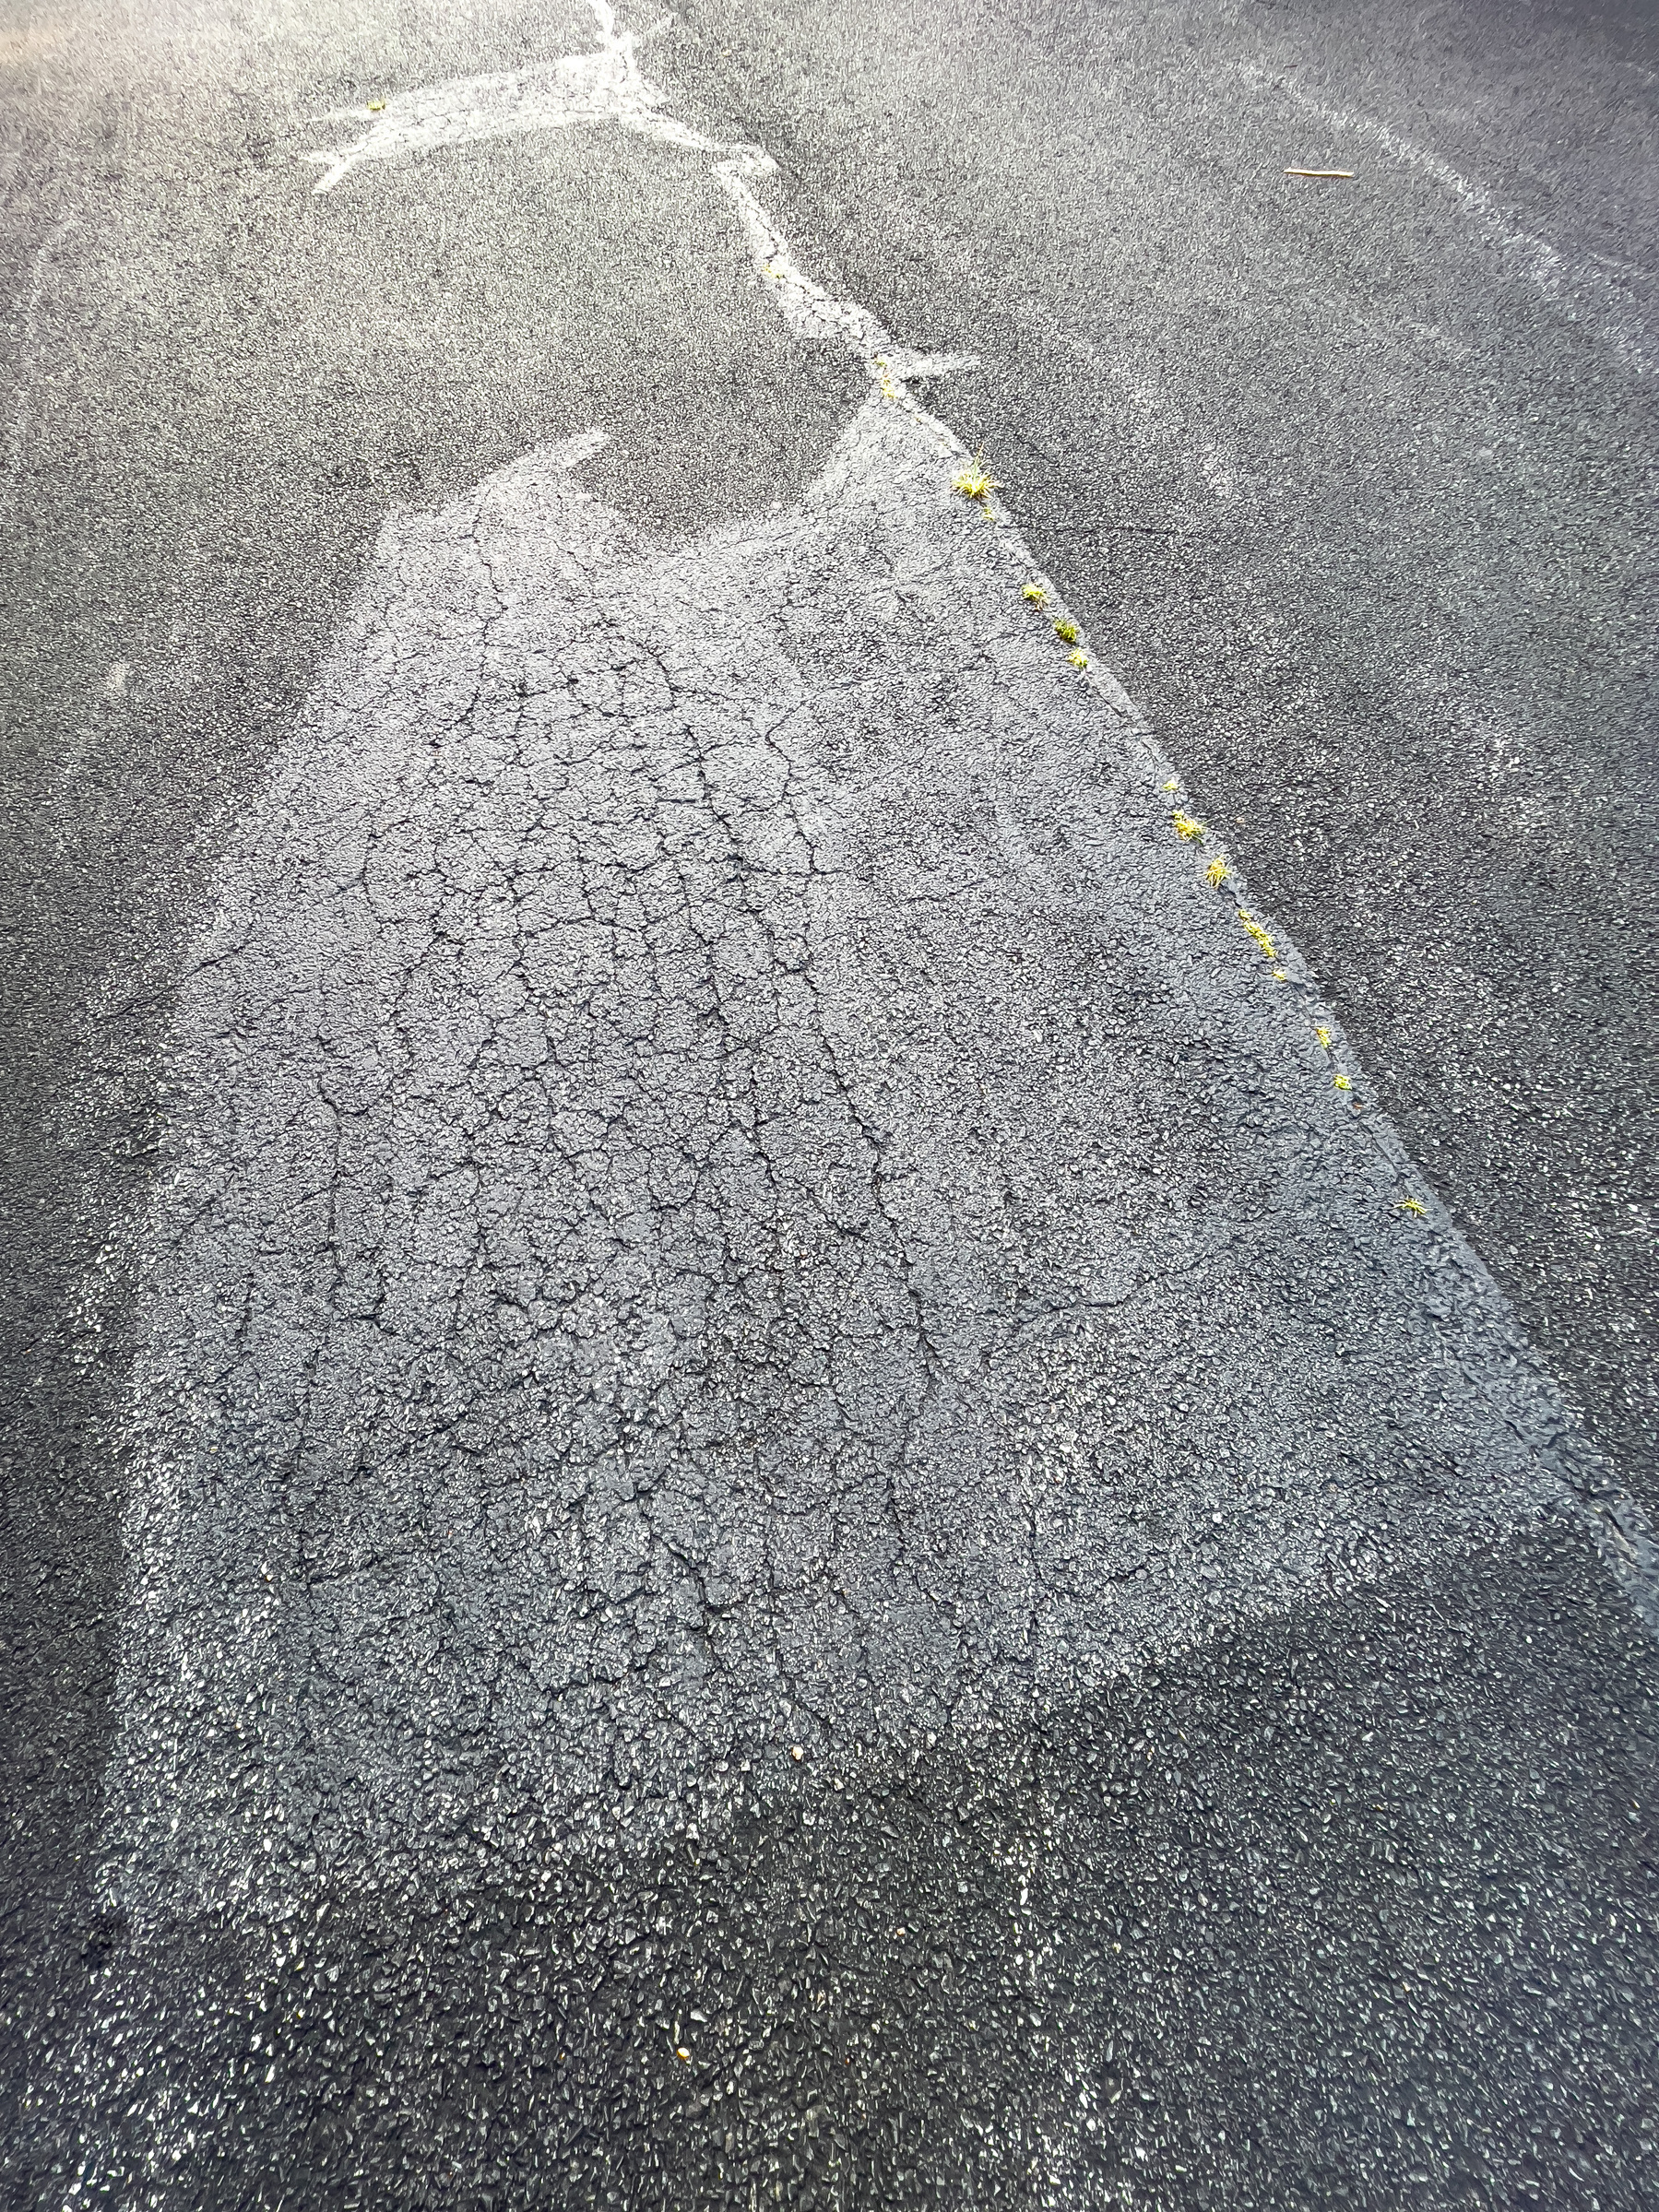 Patching shape on asphalt driveway.